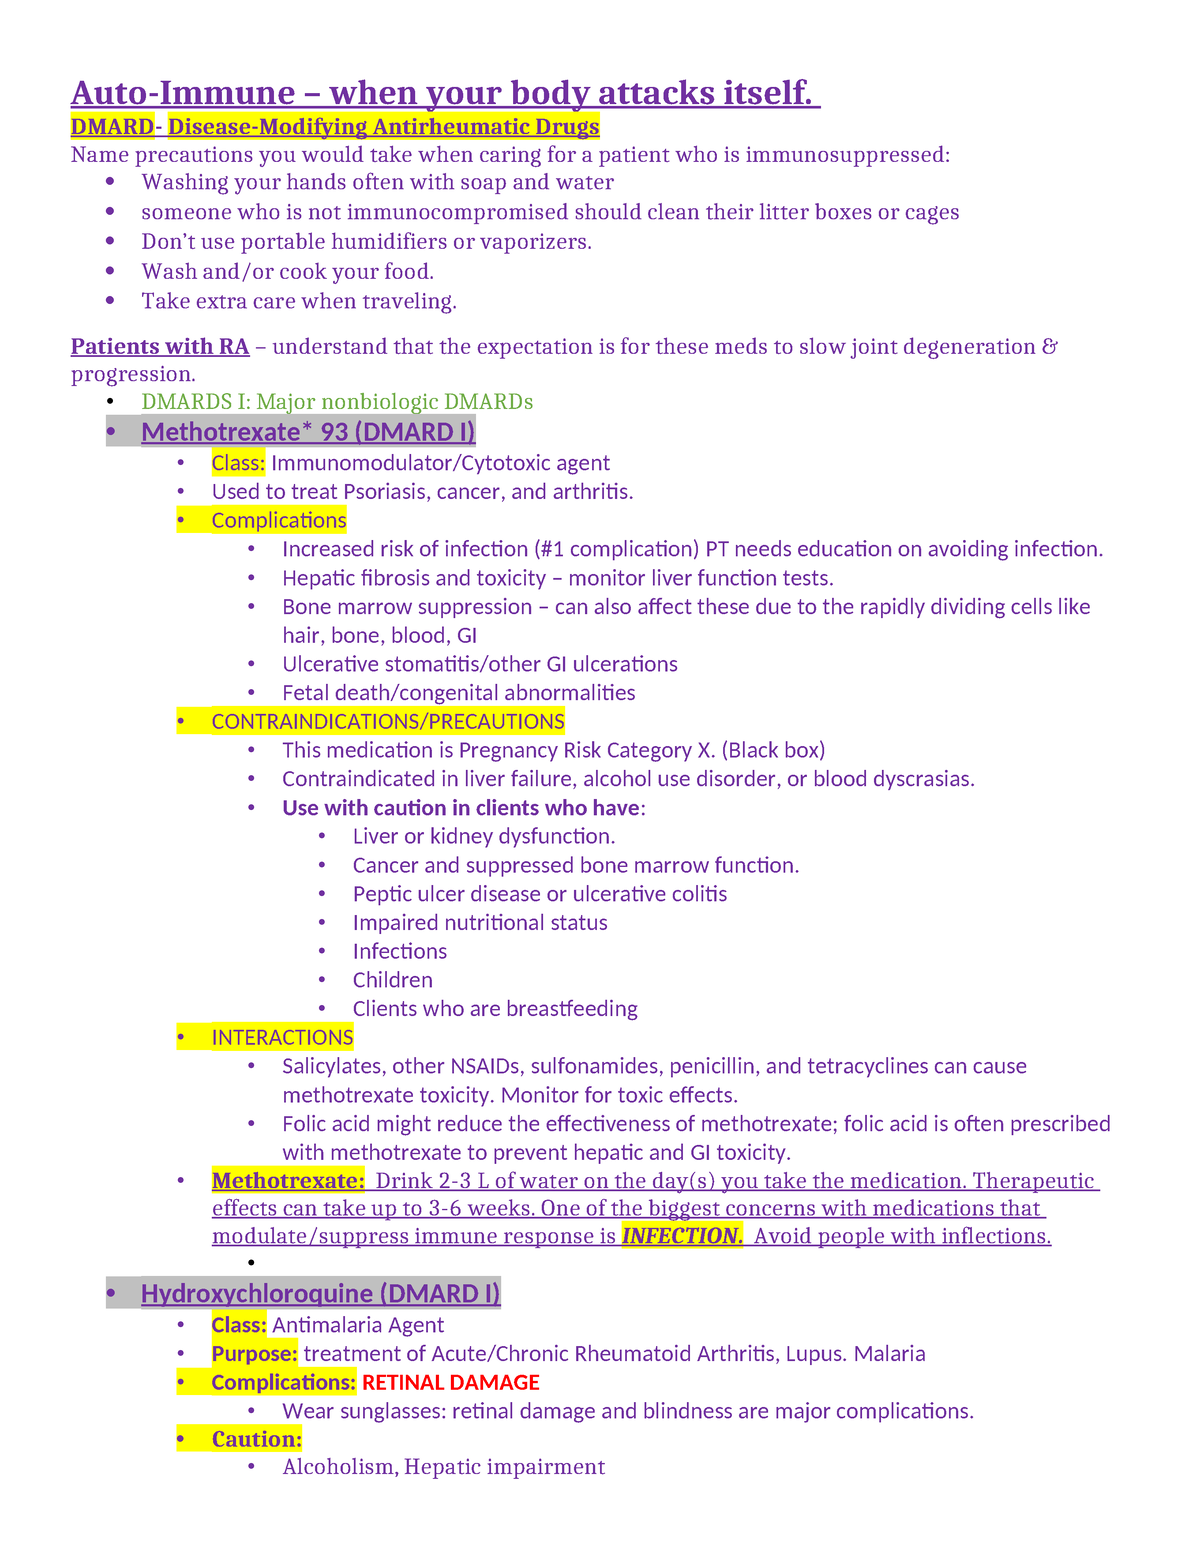 EXAM 1 Study Guide - Summary Pharmacology for Nurses - Auto-Immune ...